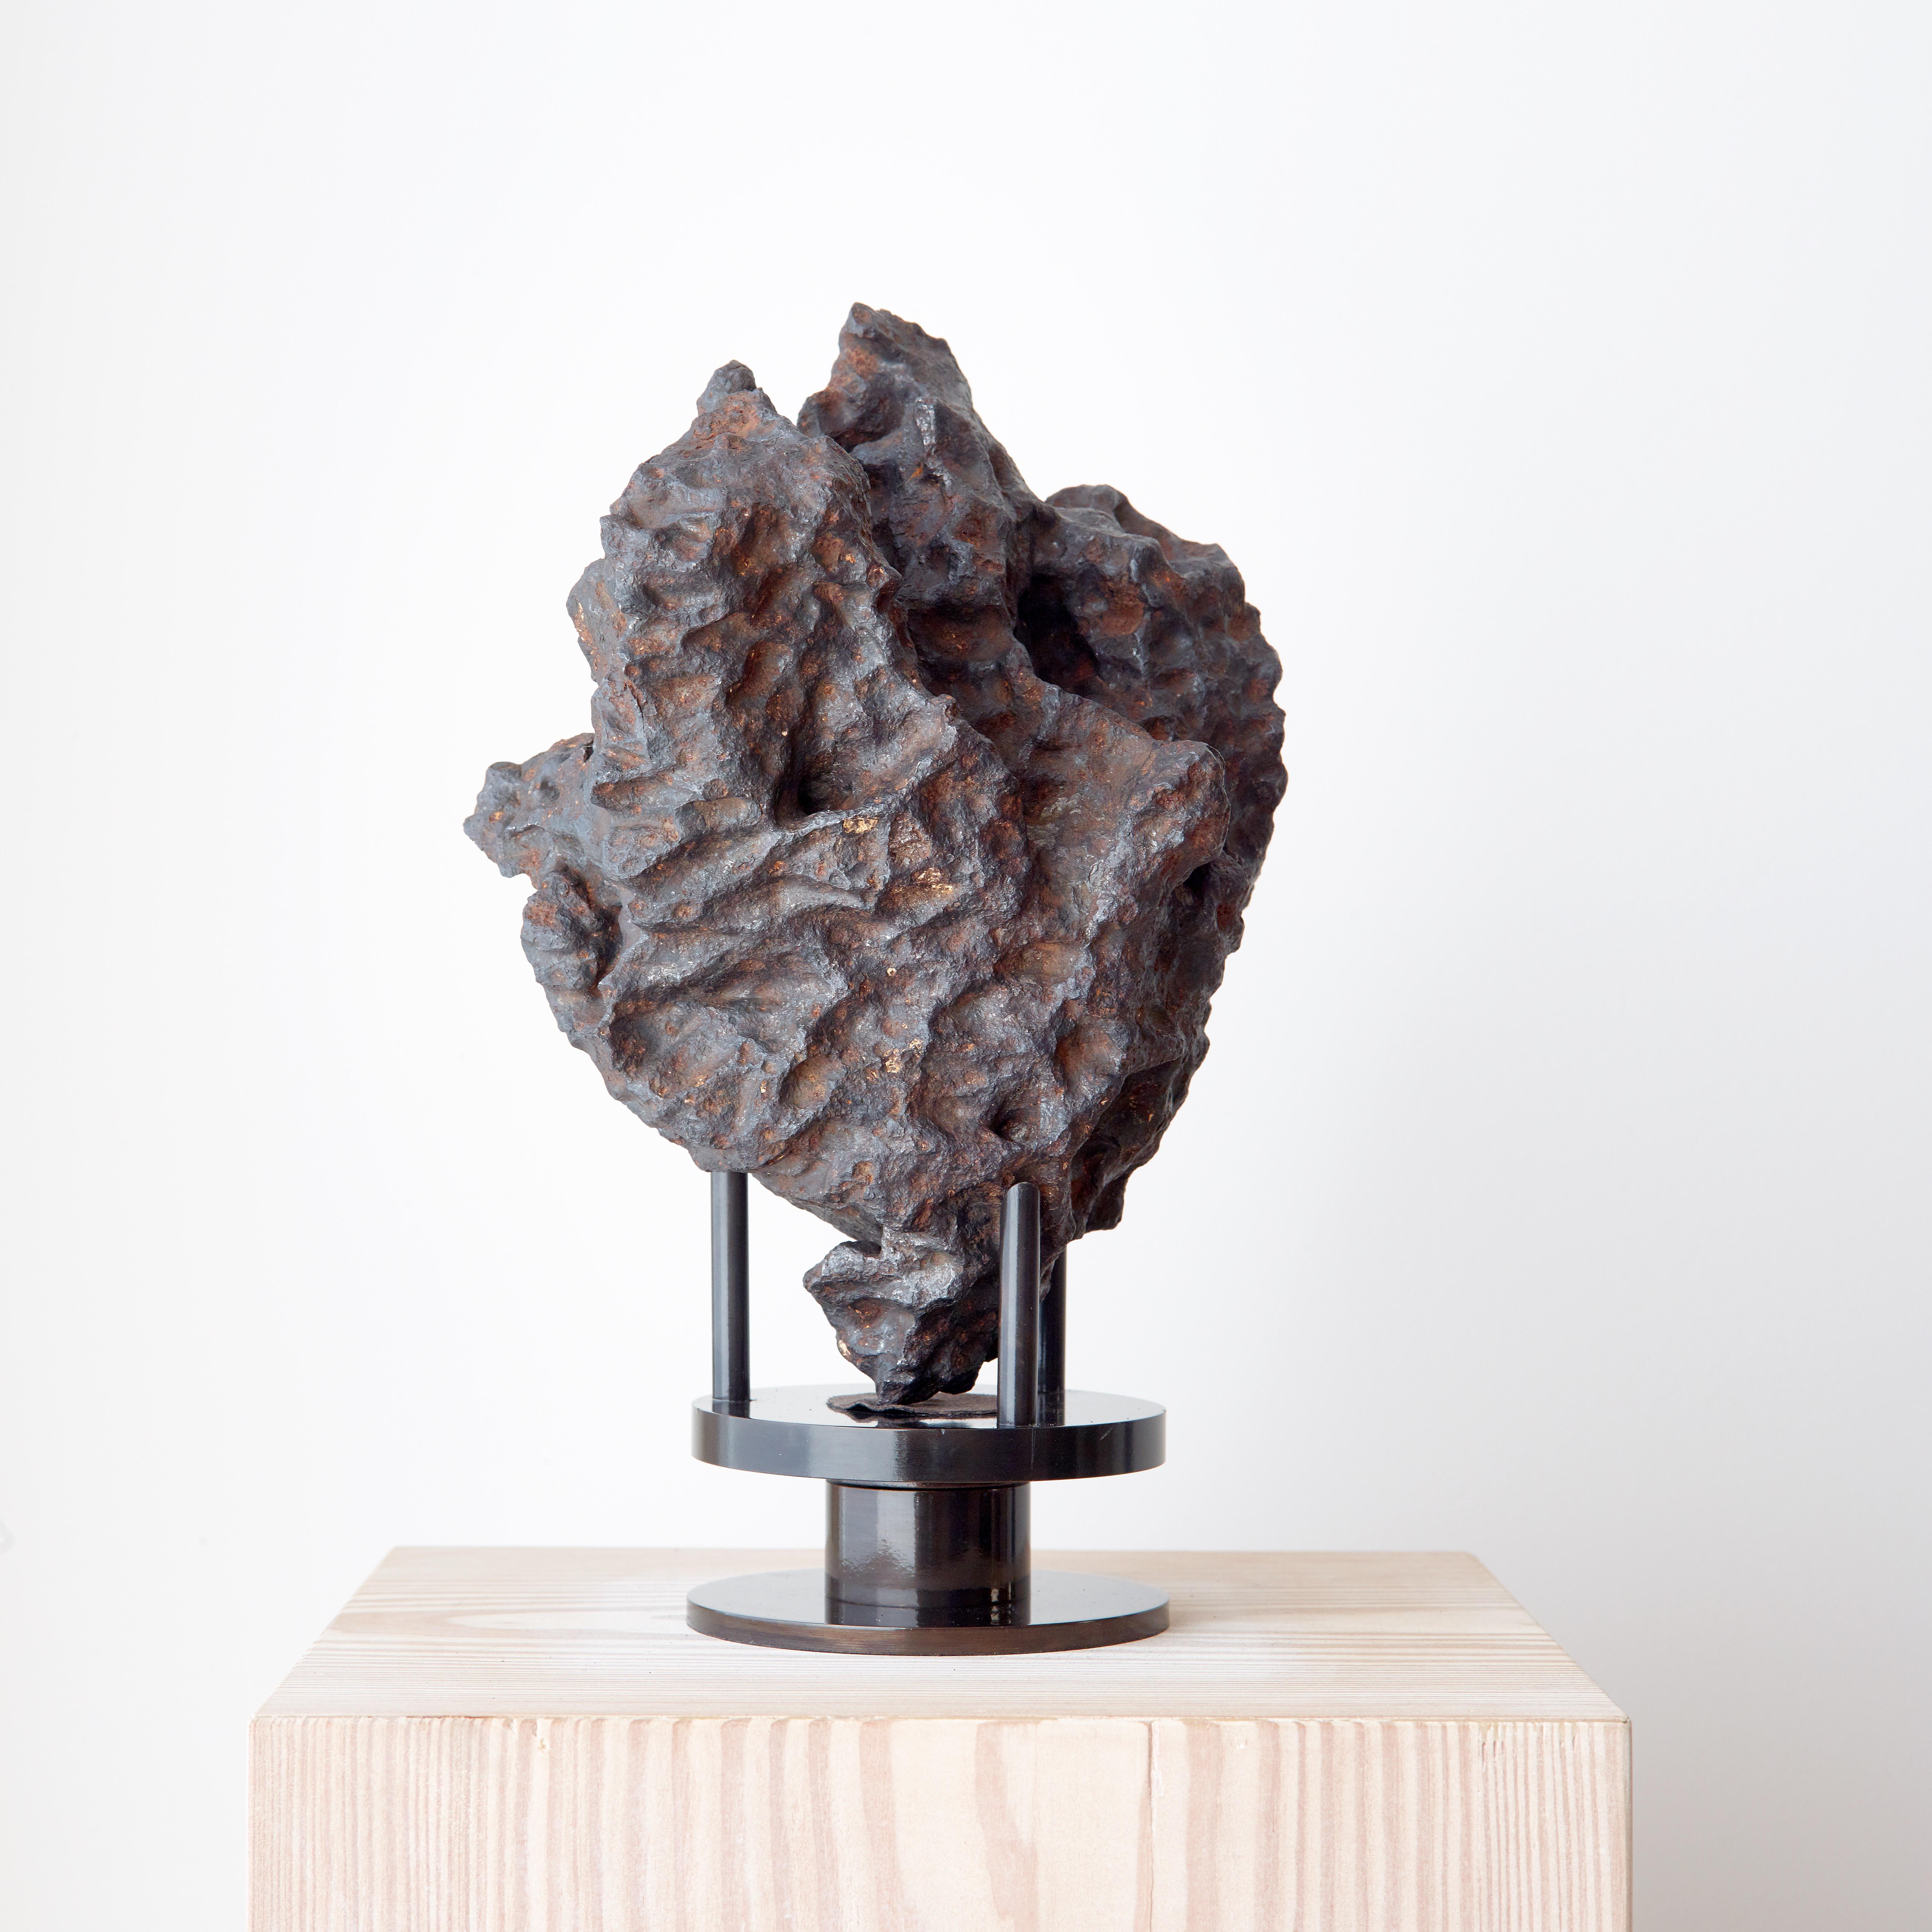 Sculptural Iron Meteorite from Morasko Poland